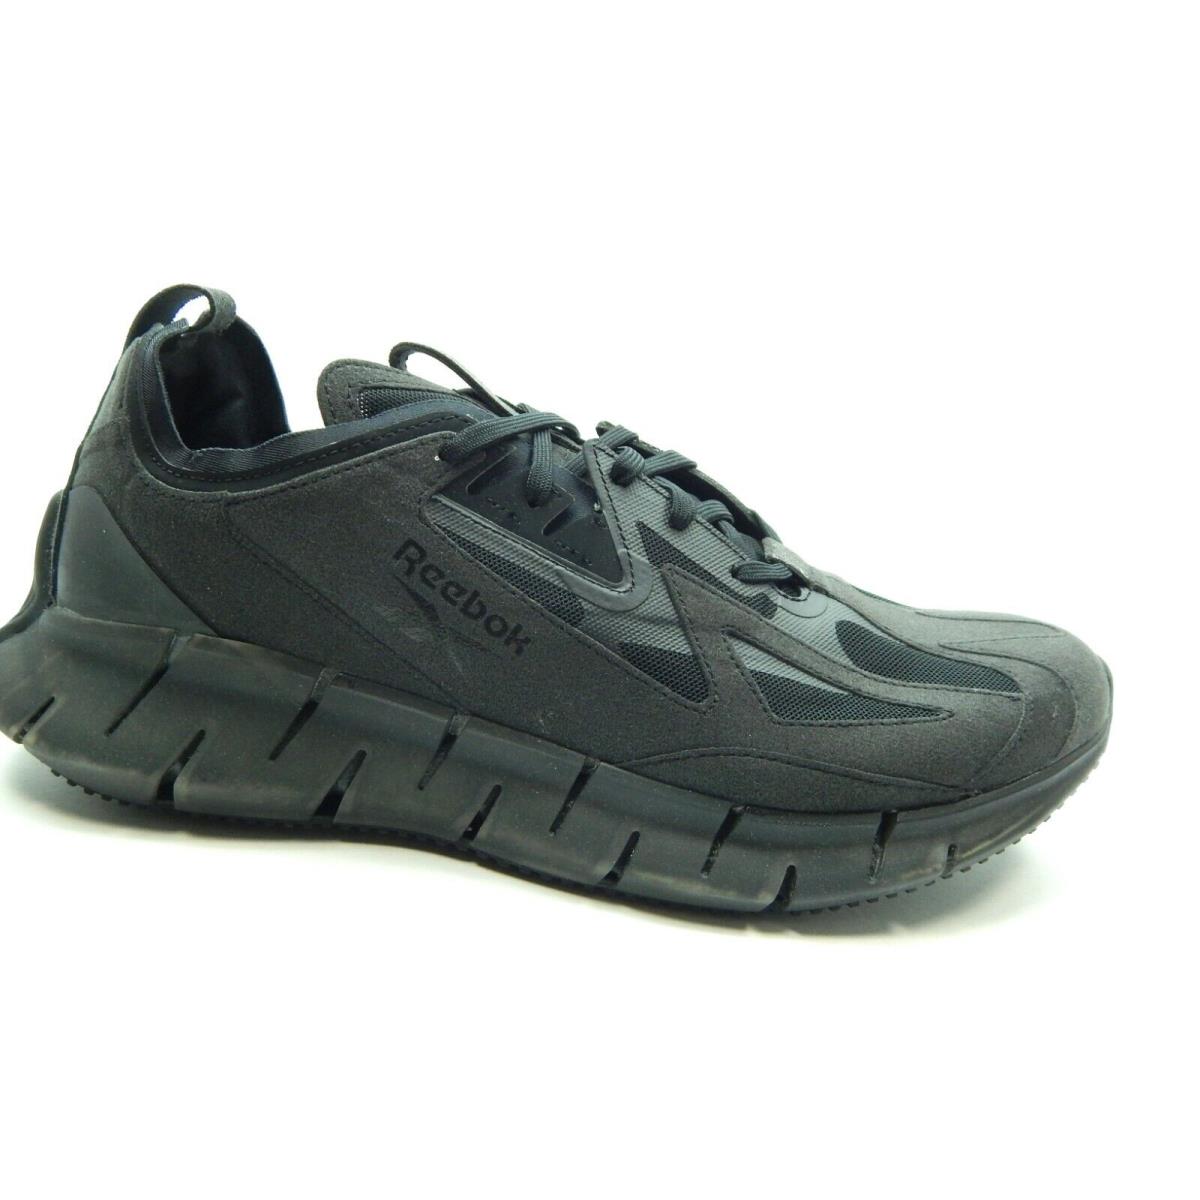 Reebok Zig Kinetica Concept Type Men Running Shoes FW5737 Black Grey Size 9.0